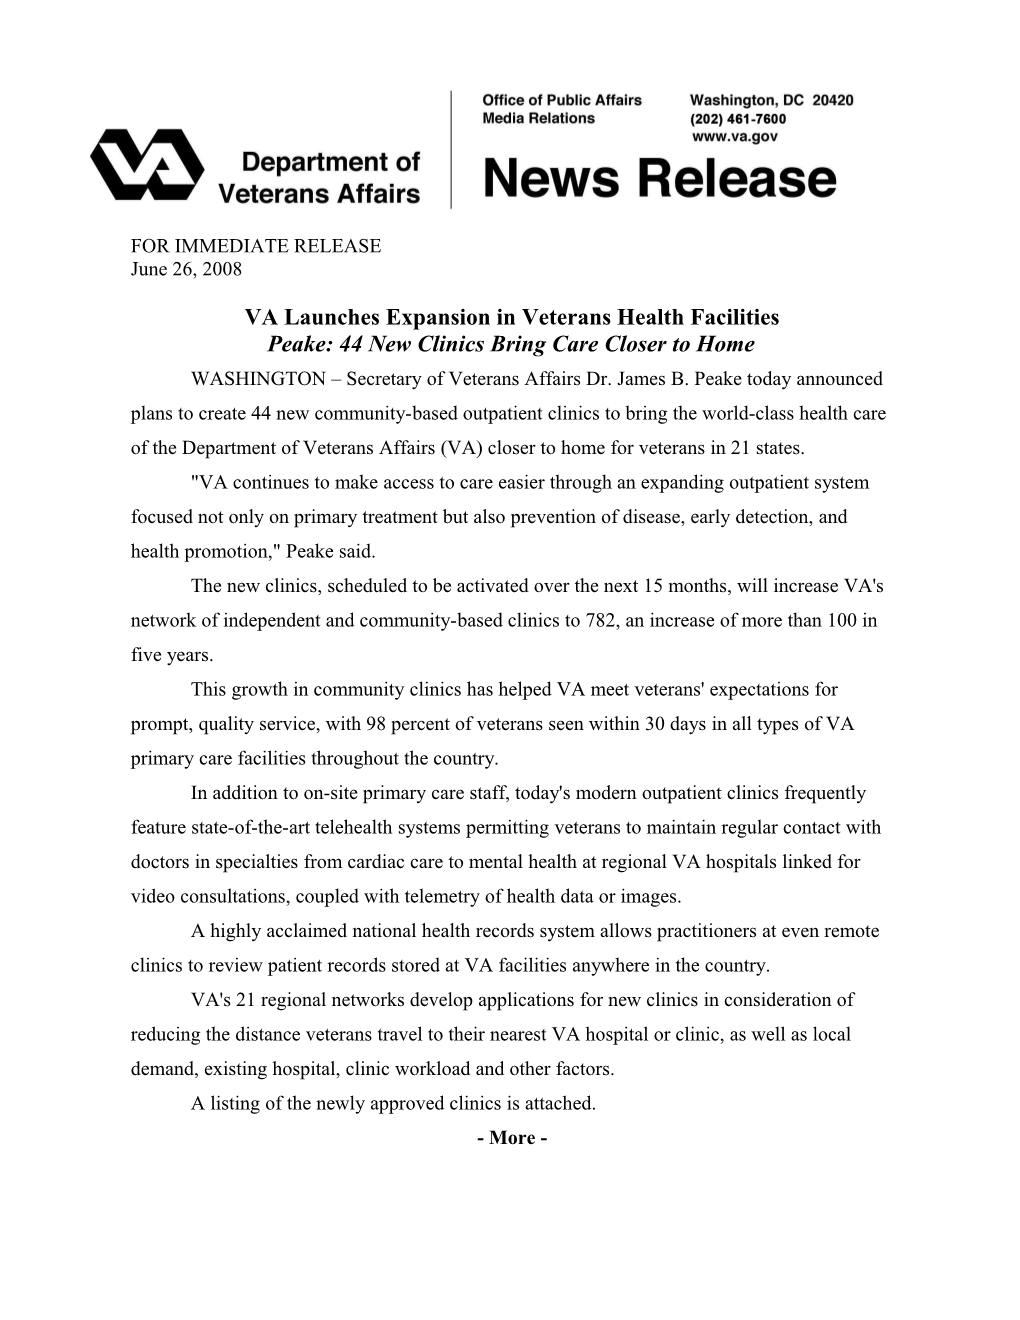 VA Launches Expansion in Veterans Health Facilities